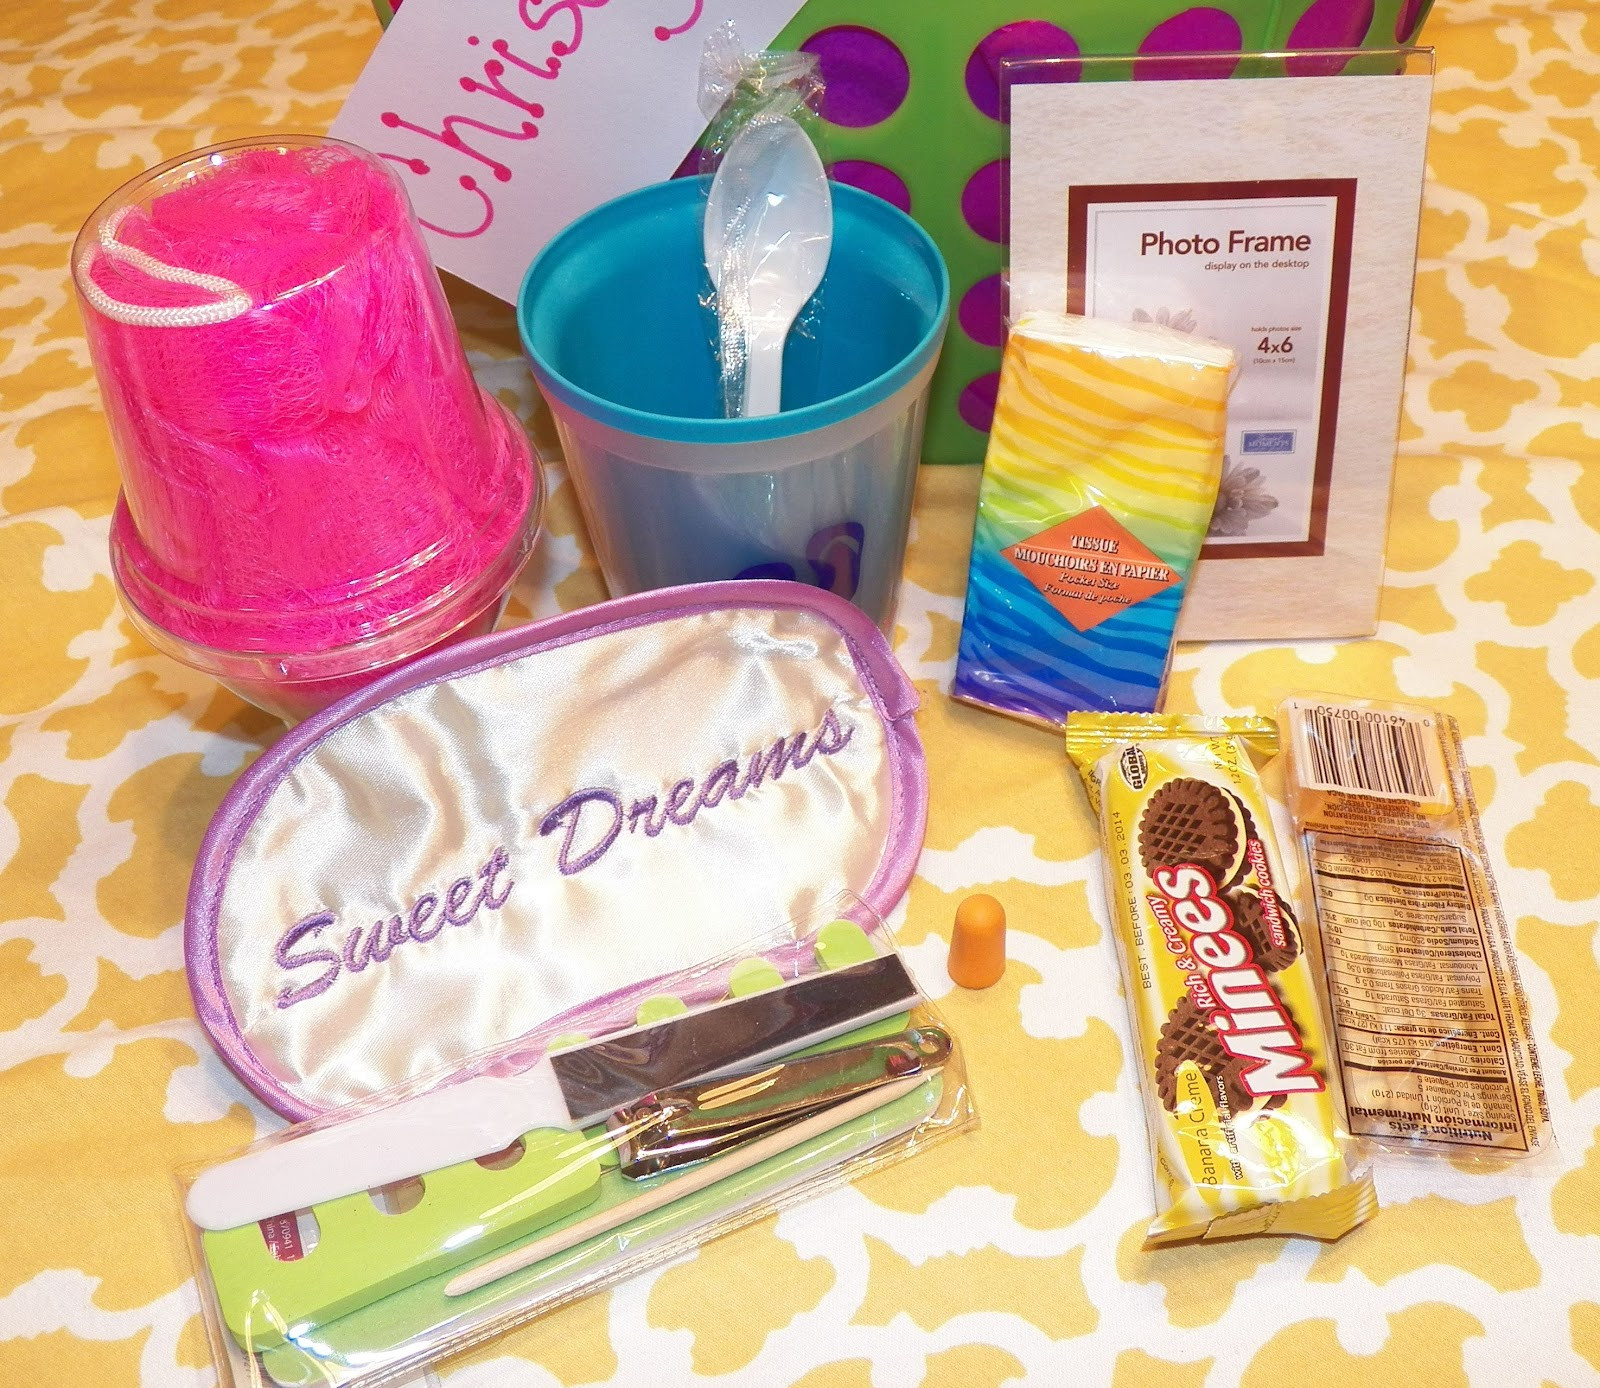 Girls Night Gift Ideas
 Christy s Cuties Girl s Night Gift Baskets